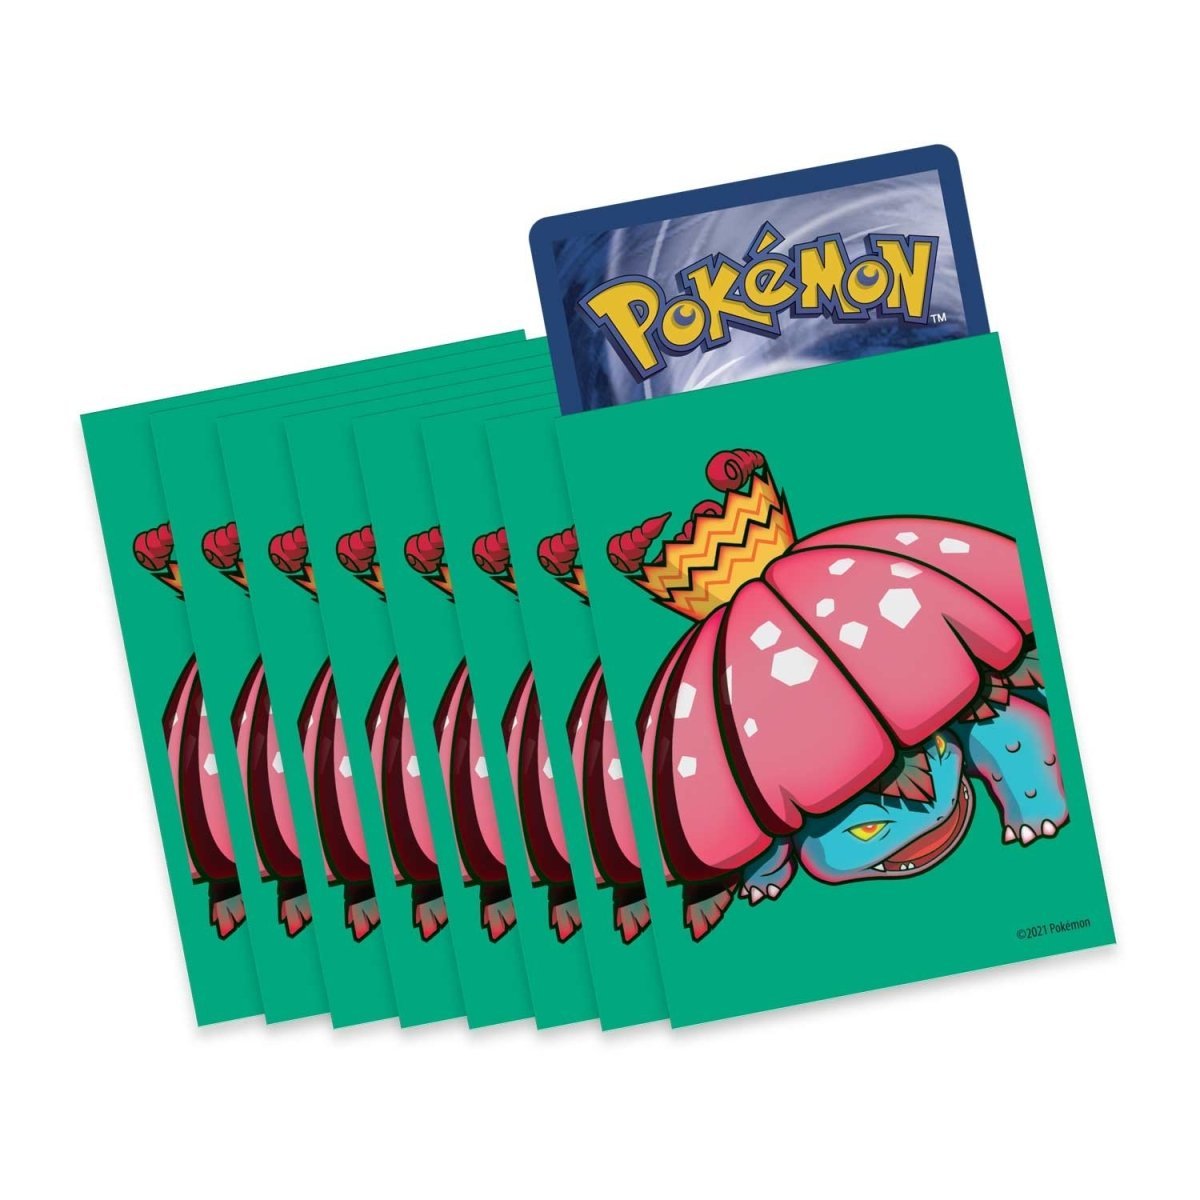 Pokémon TCG: Venusaur VMAX Battle Box - PokeRvmCollection Box